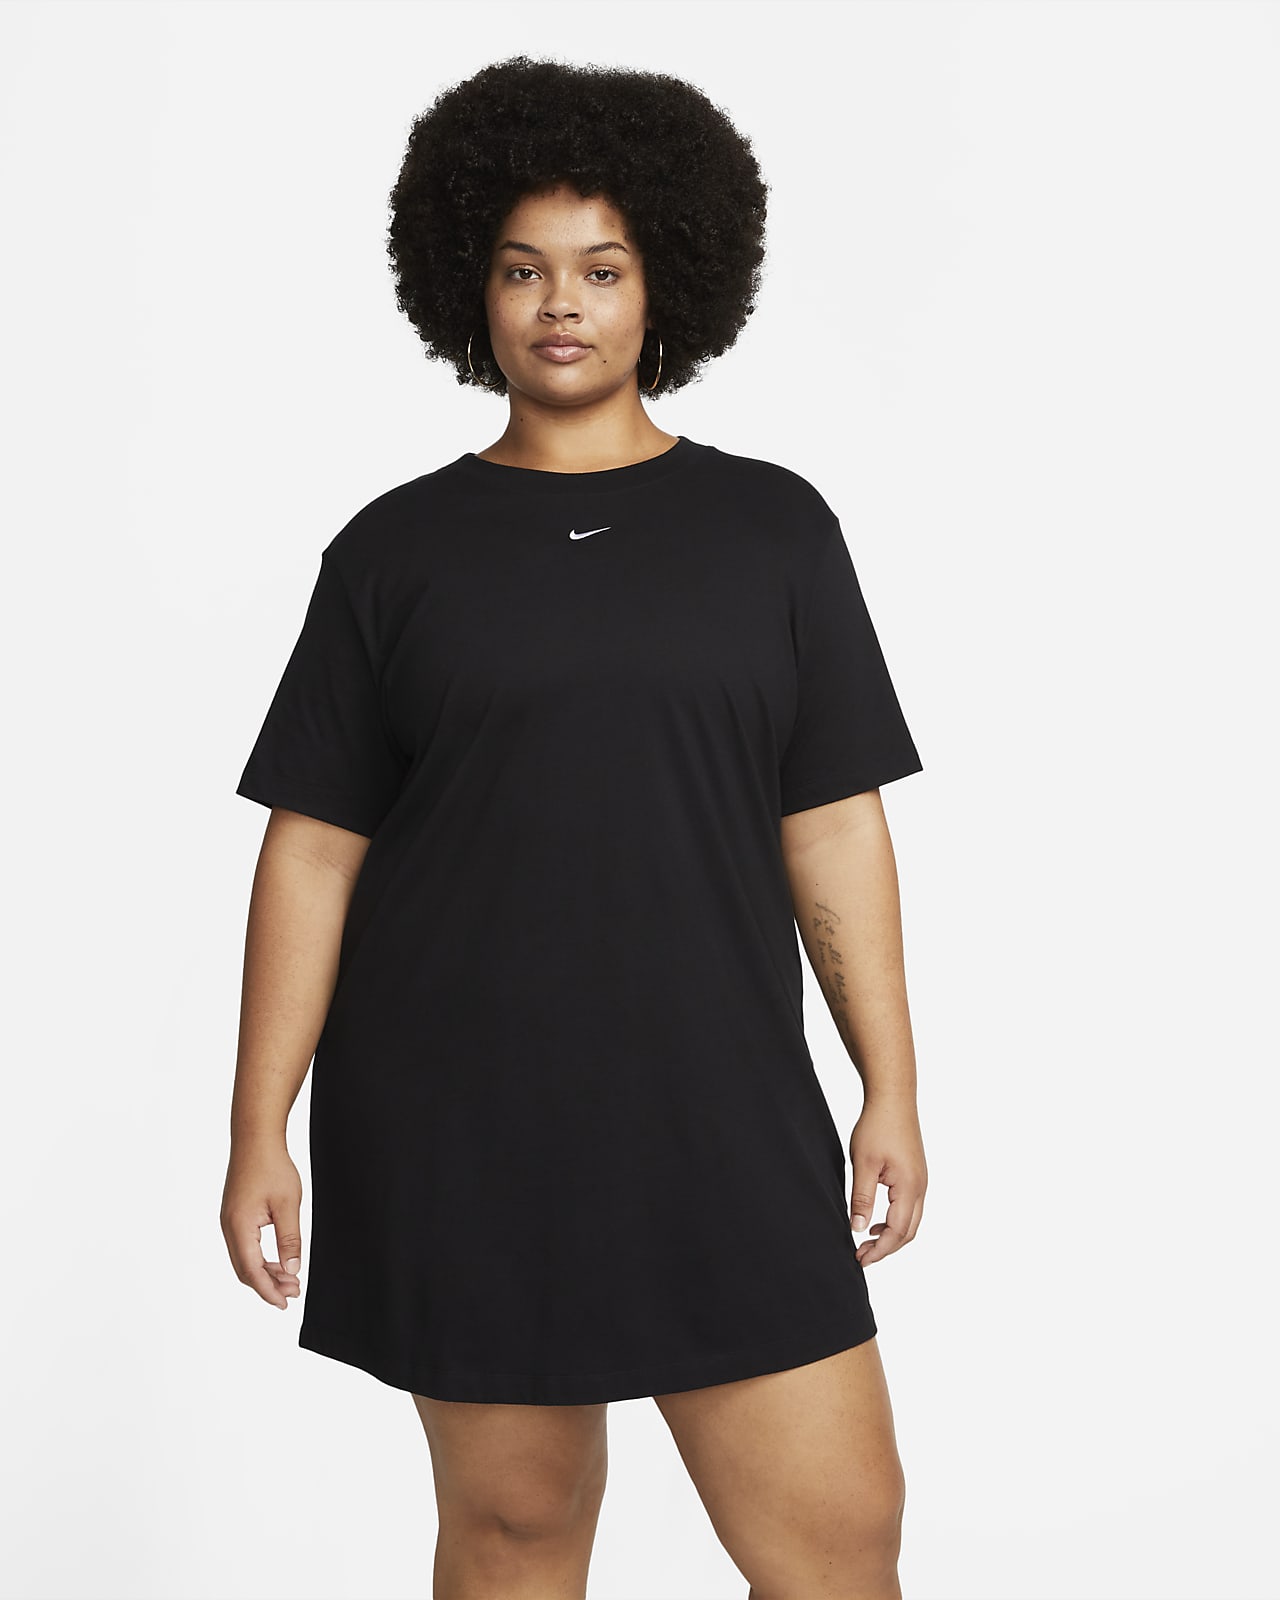 Nike Sportswear Essential Women's Short-Sleeve T-Shirt Dress (Plus Size).  Nike.com